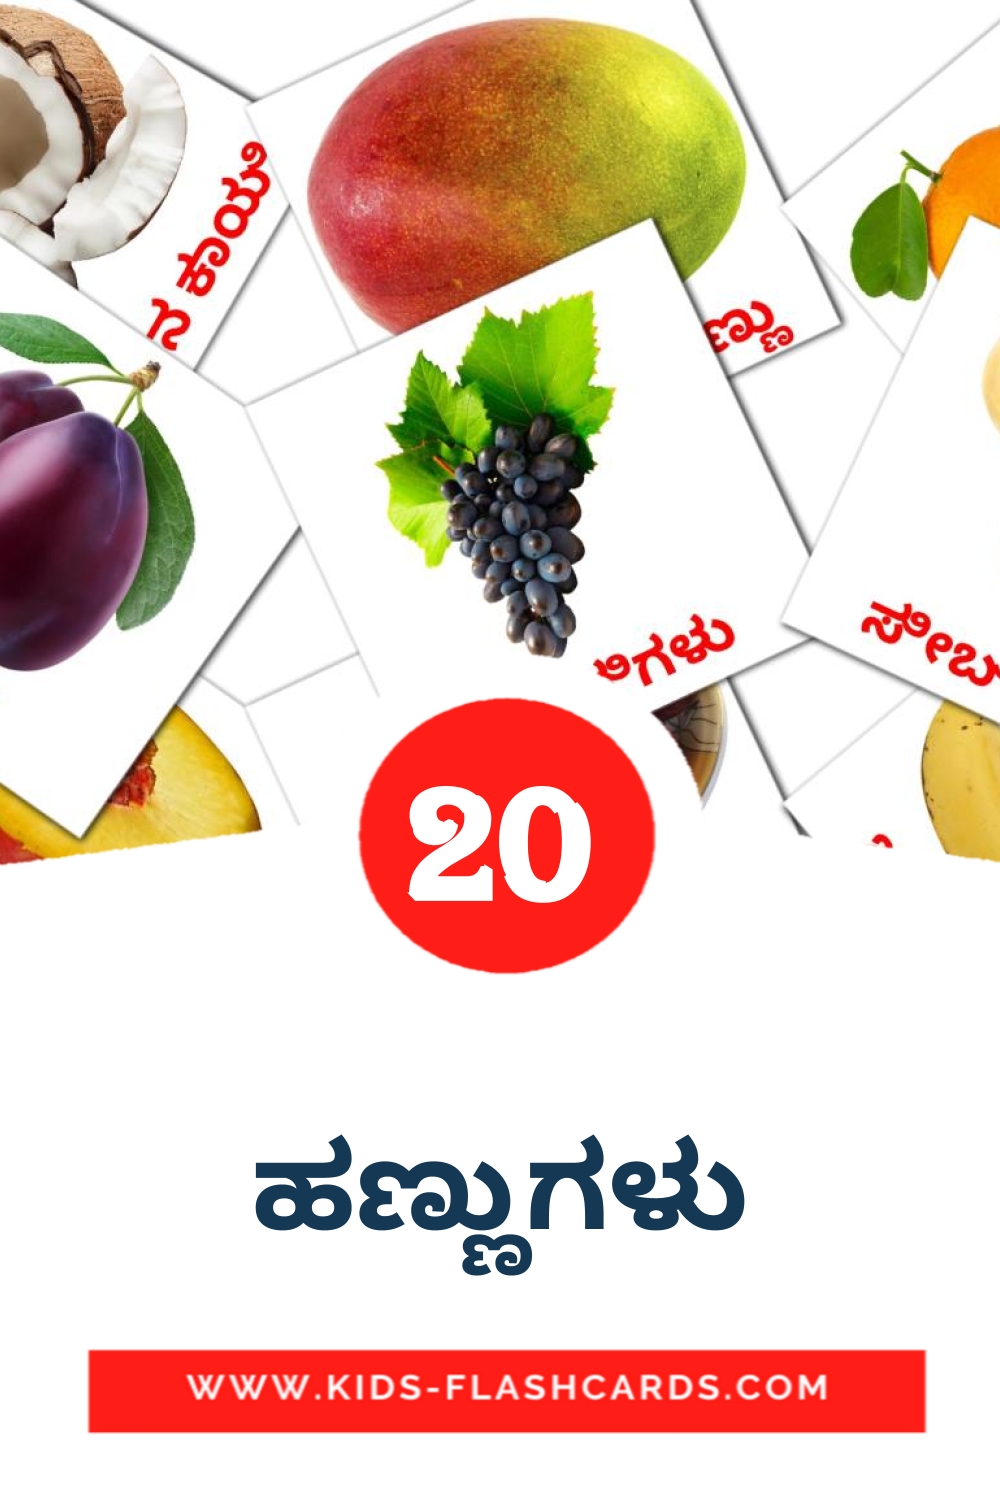 20 tarjetas didacticas de ಹಣ್ಣುಗಳು para el jardín de infancia en kannada